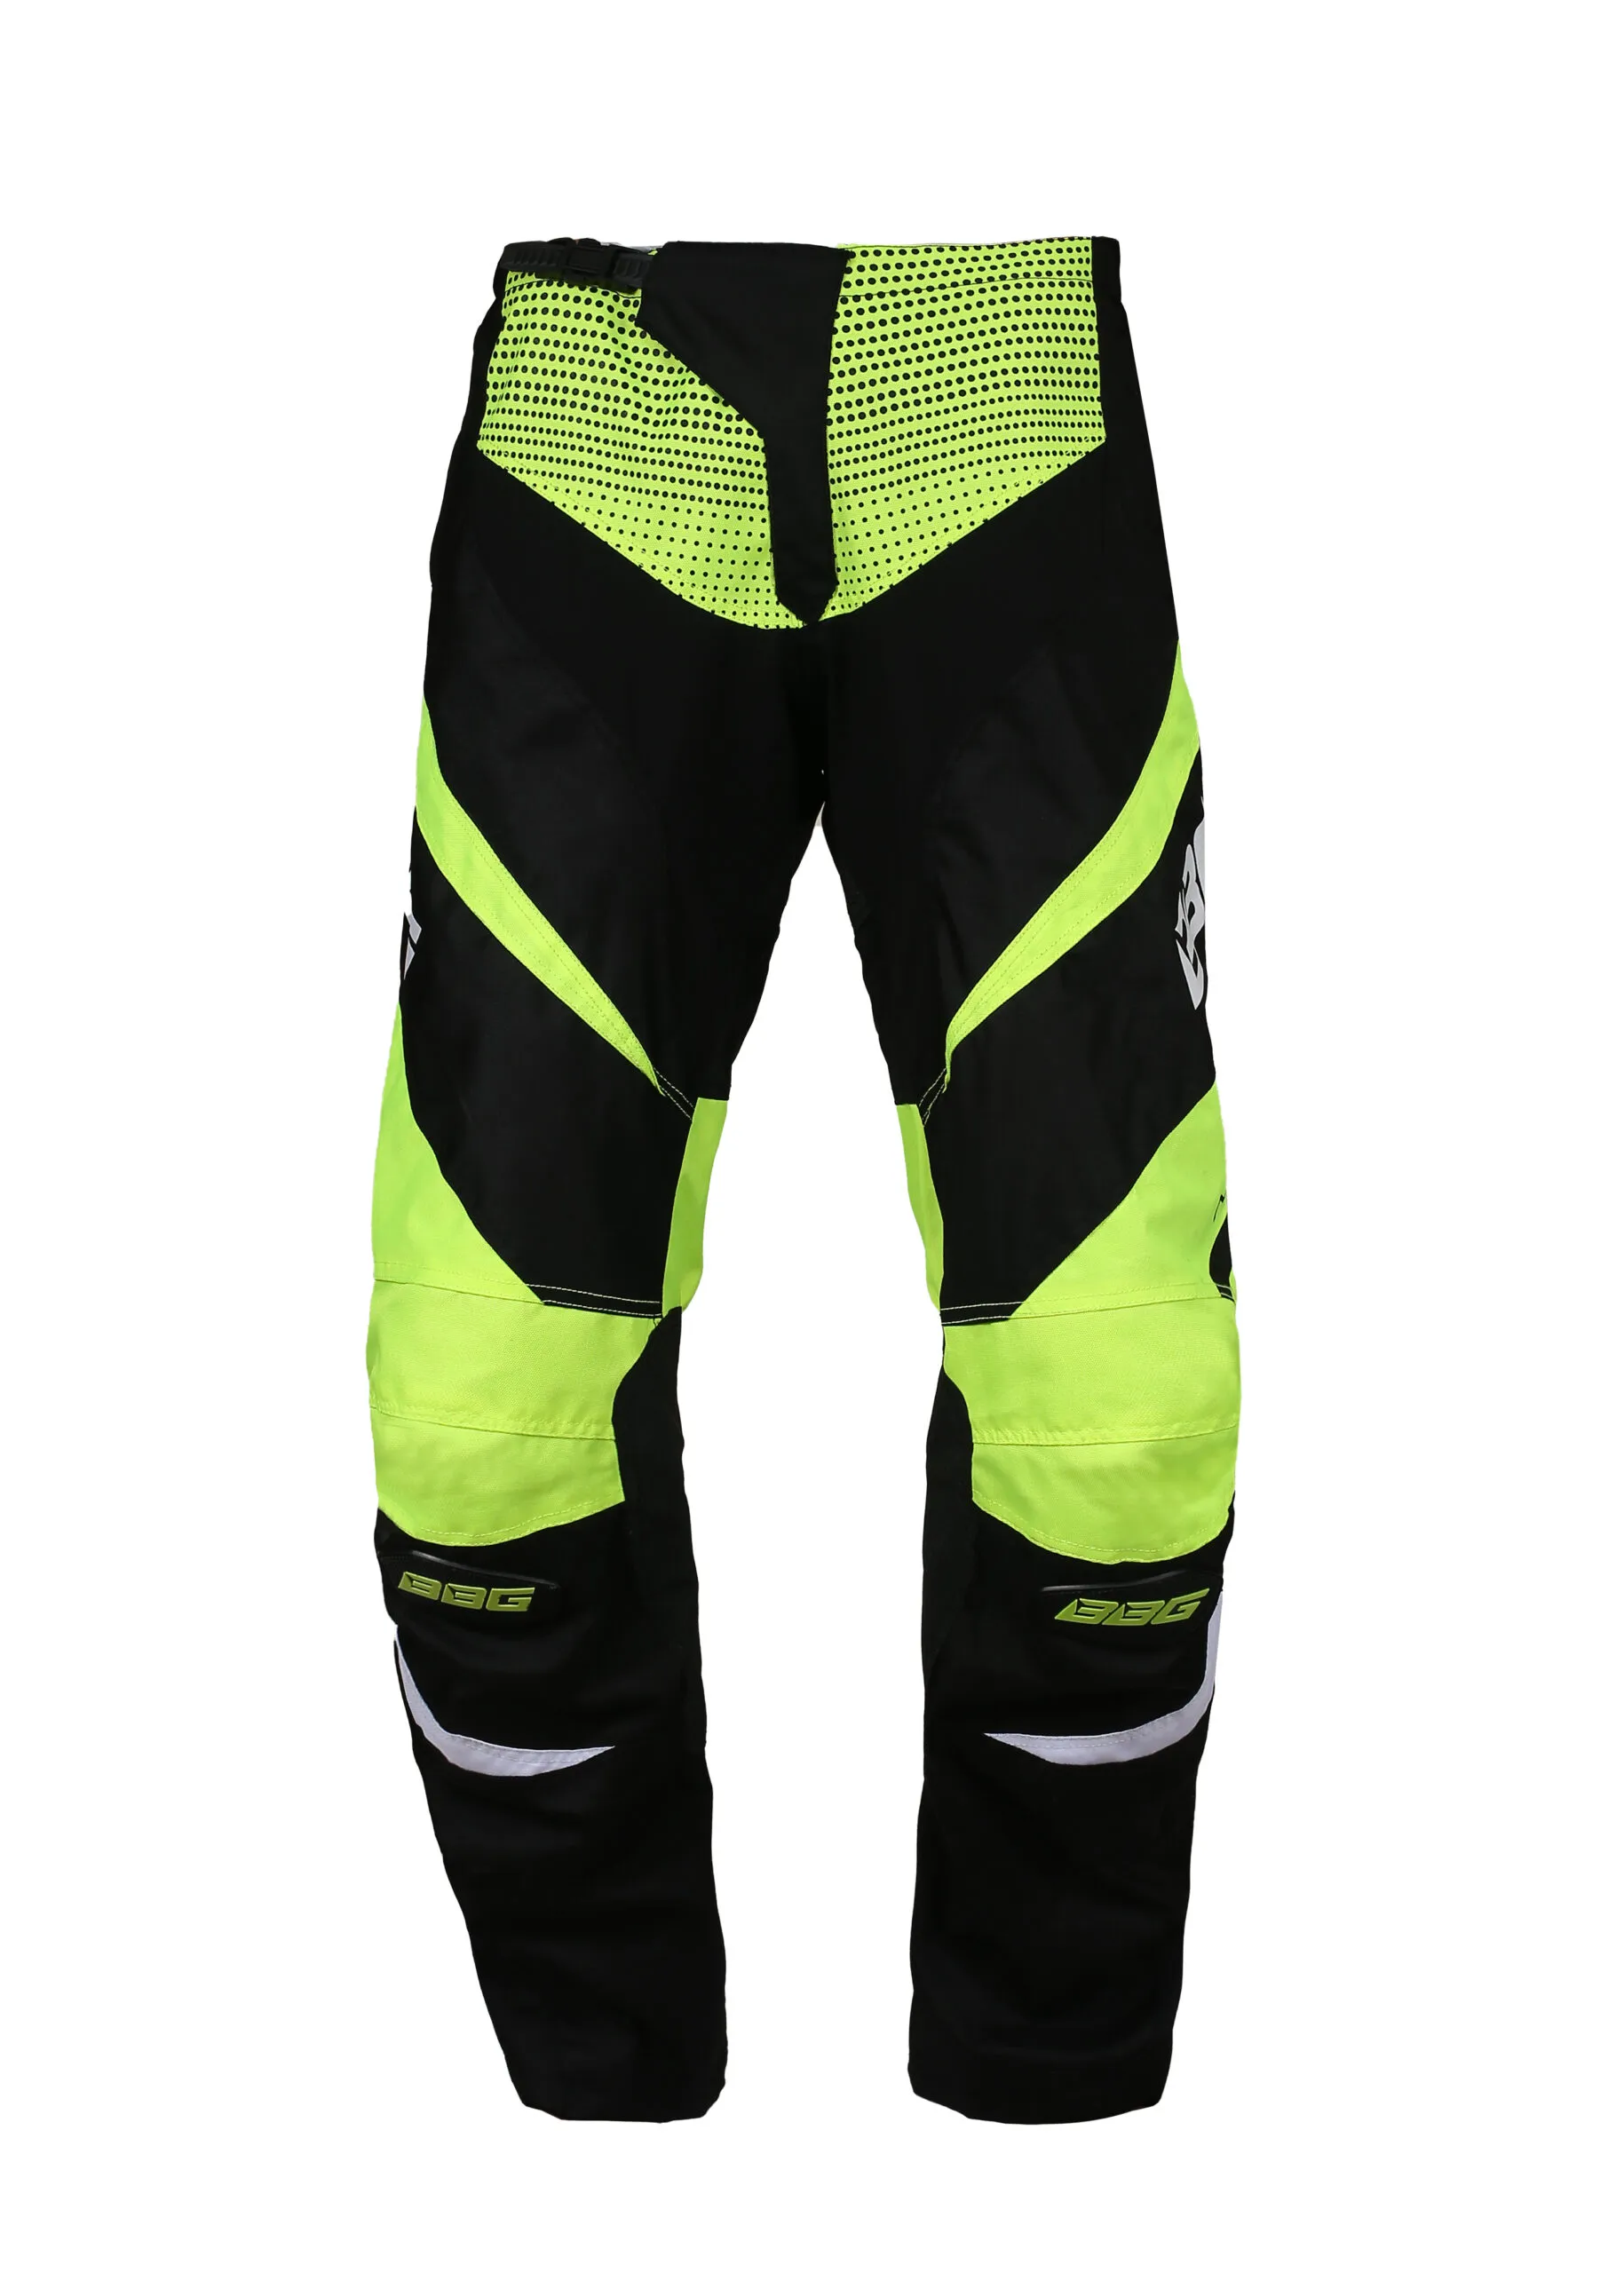 Women's Motocross trousers - Dirt Bike pants | Fox Racing® UK